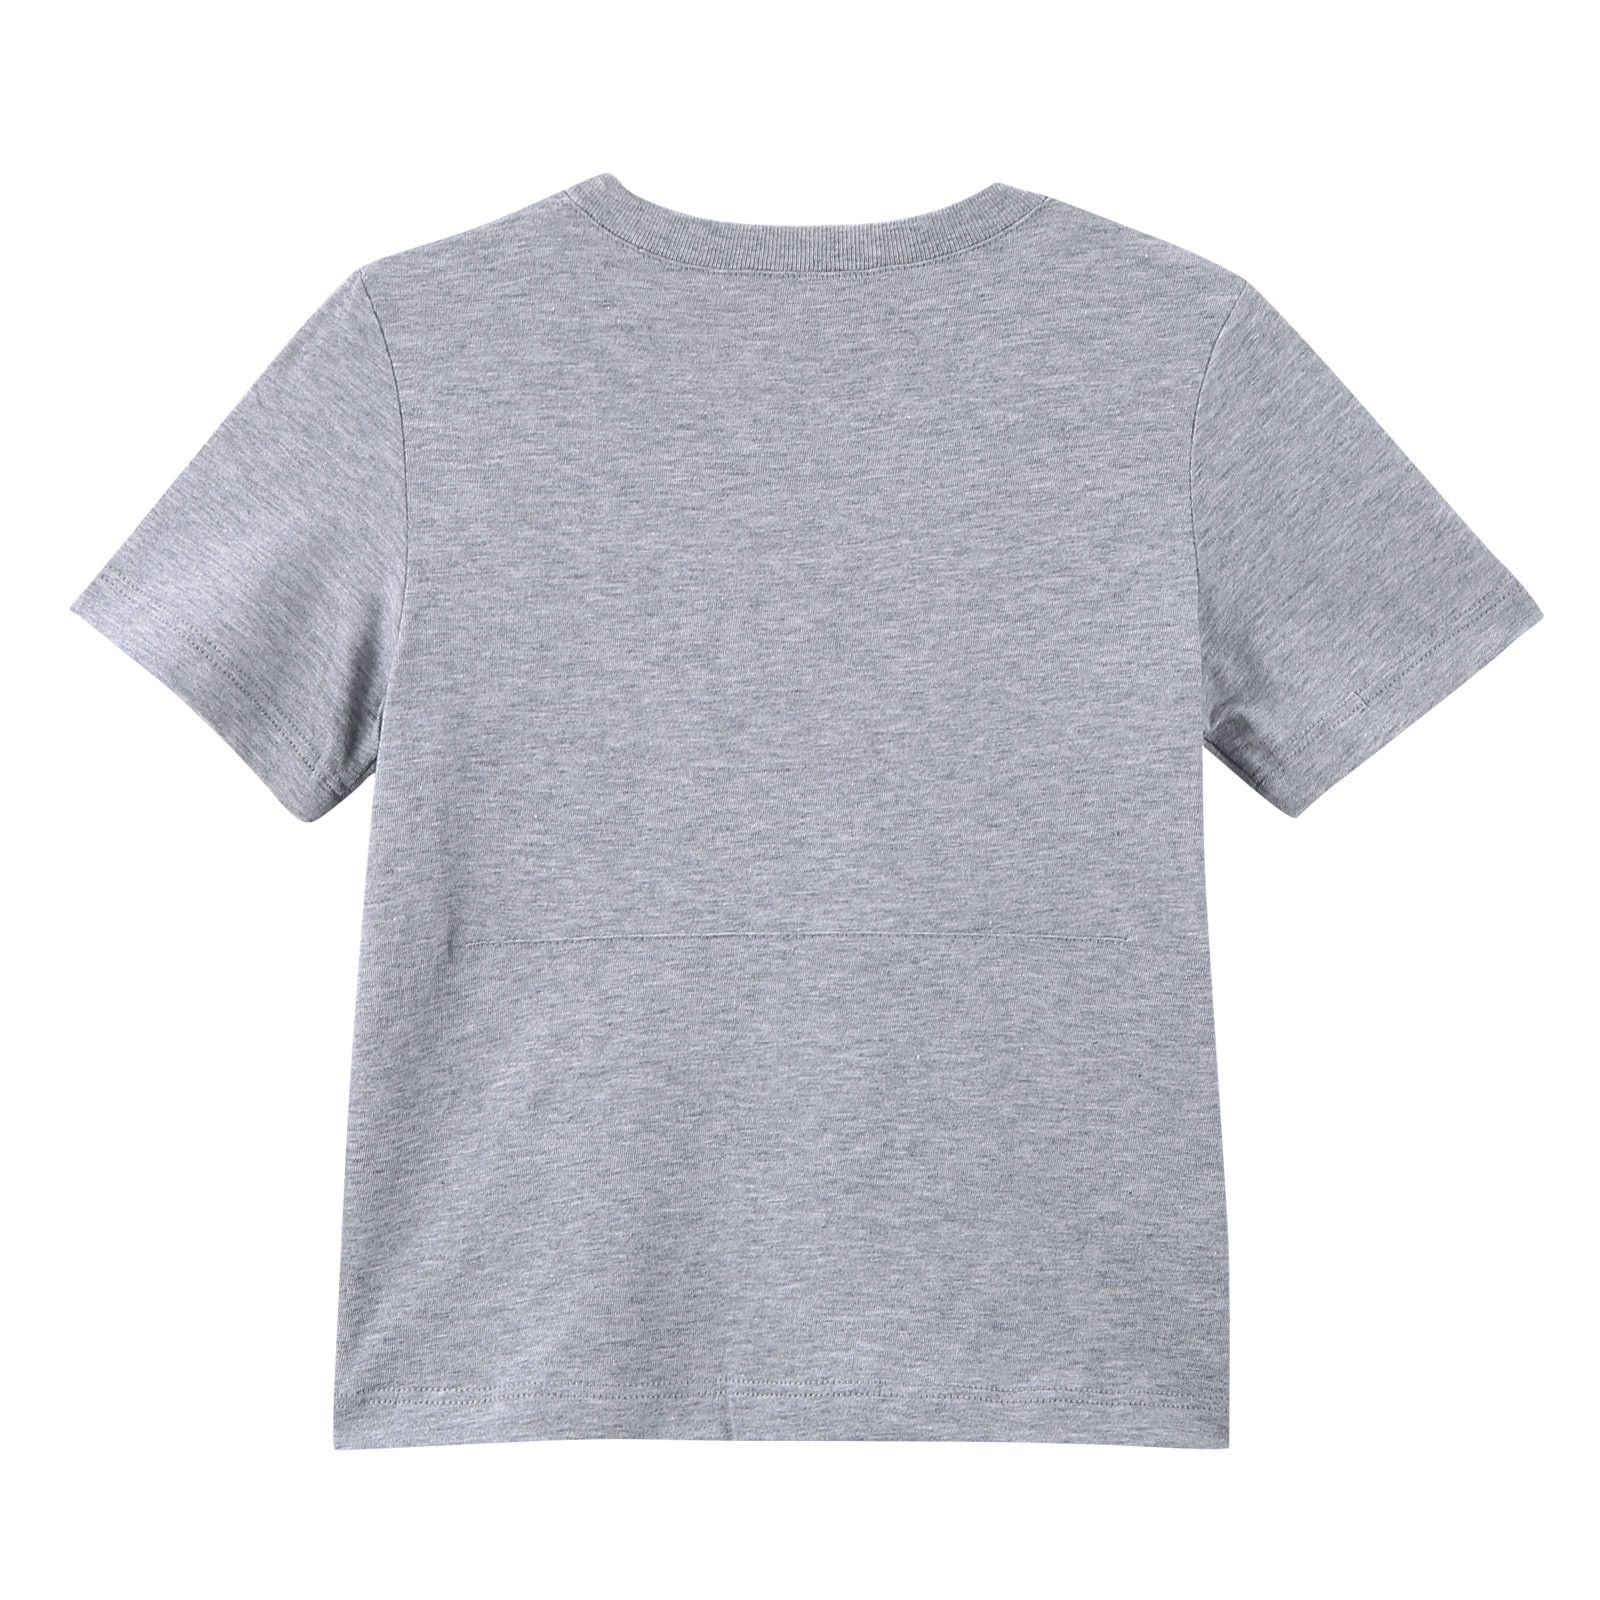 Girls Grey Bus Printed Cotton Jersey T-Shirt - CÉMAROSE | Children's Fashion Store - 2